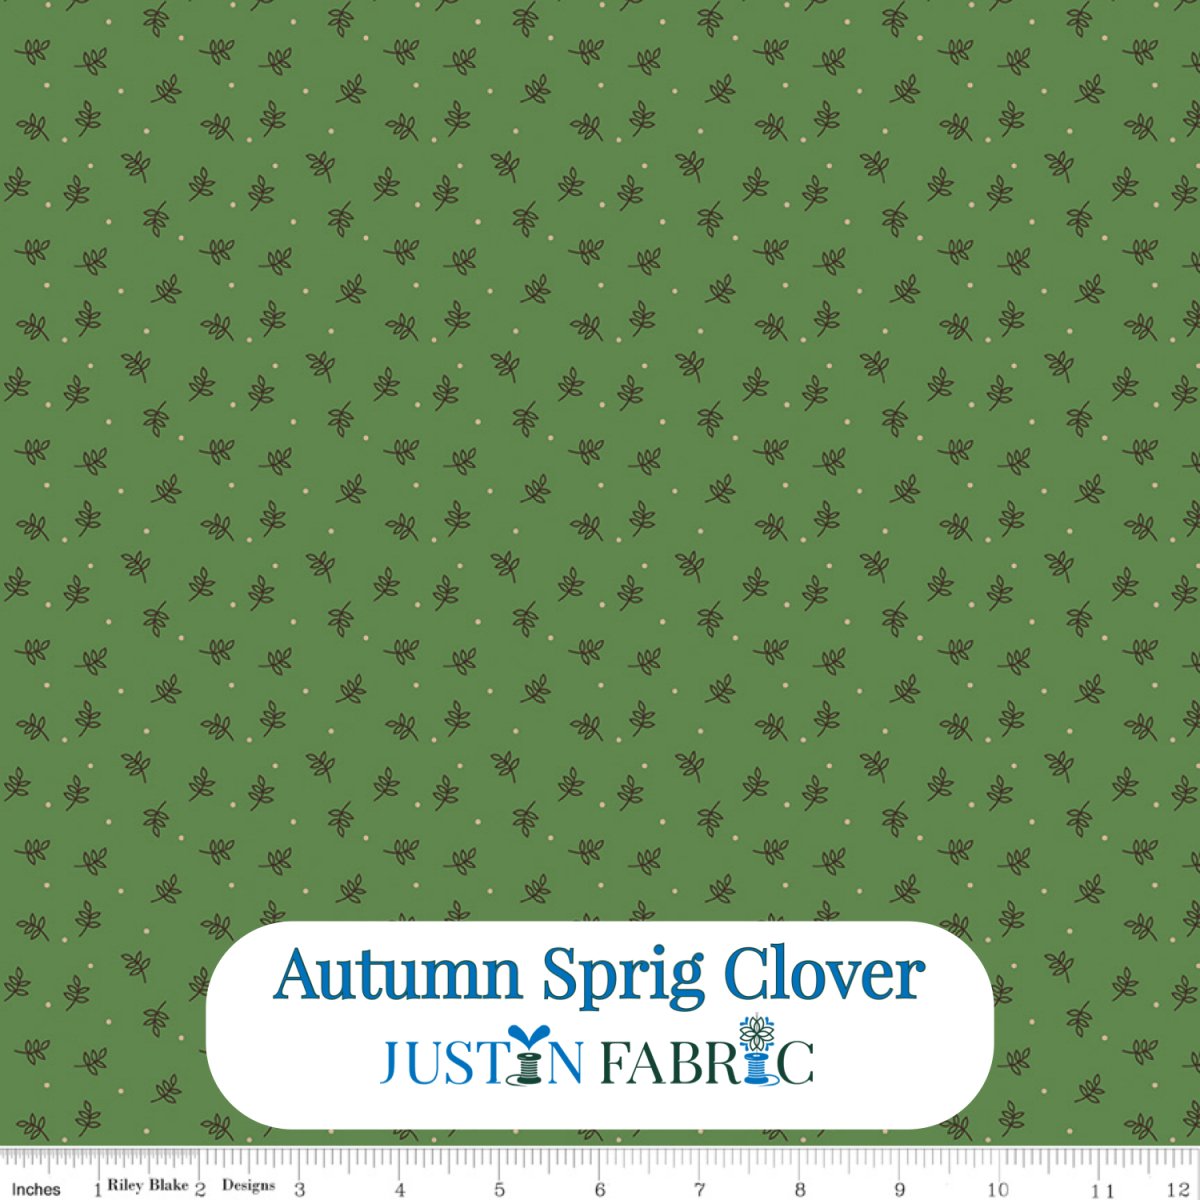 Autumn Sprig Clover Cotton Yardage by Lori Holt | Riley Blake Designs -C14663-CLOVER - Justin Fabric!